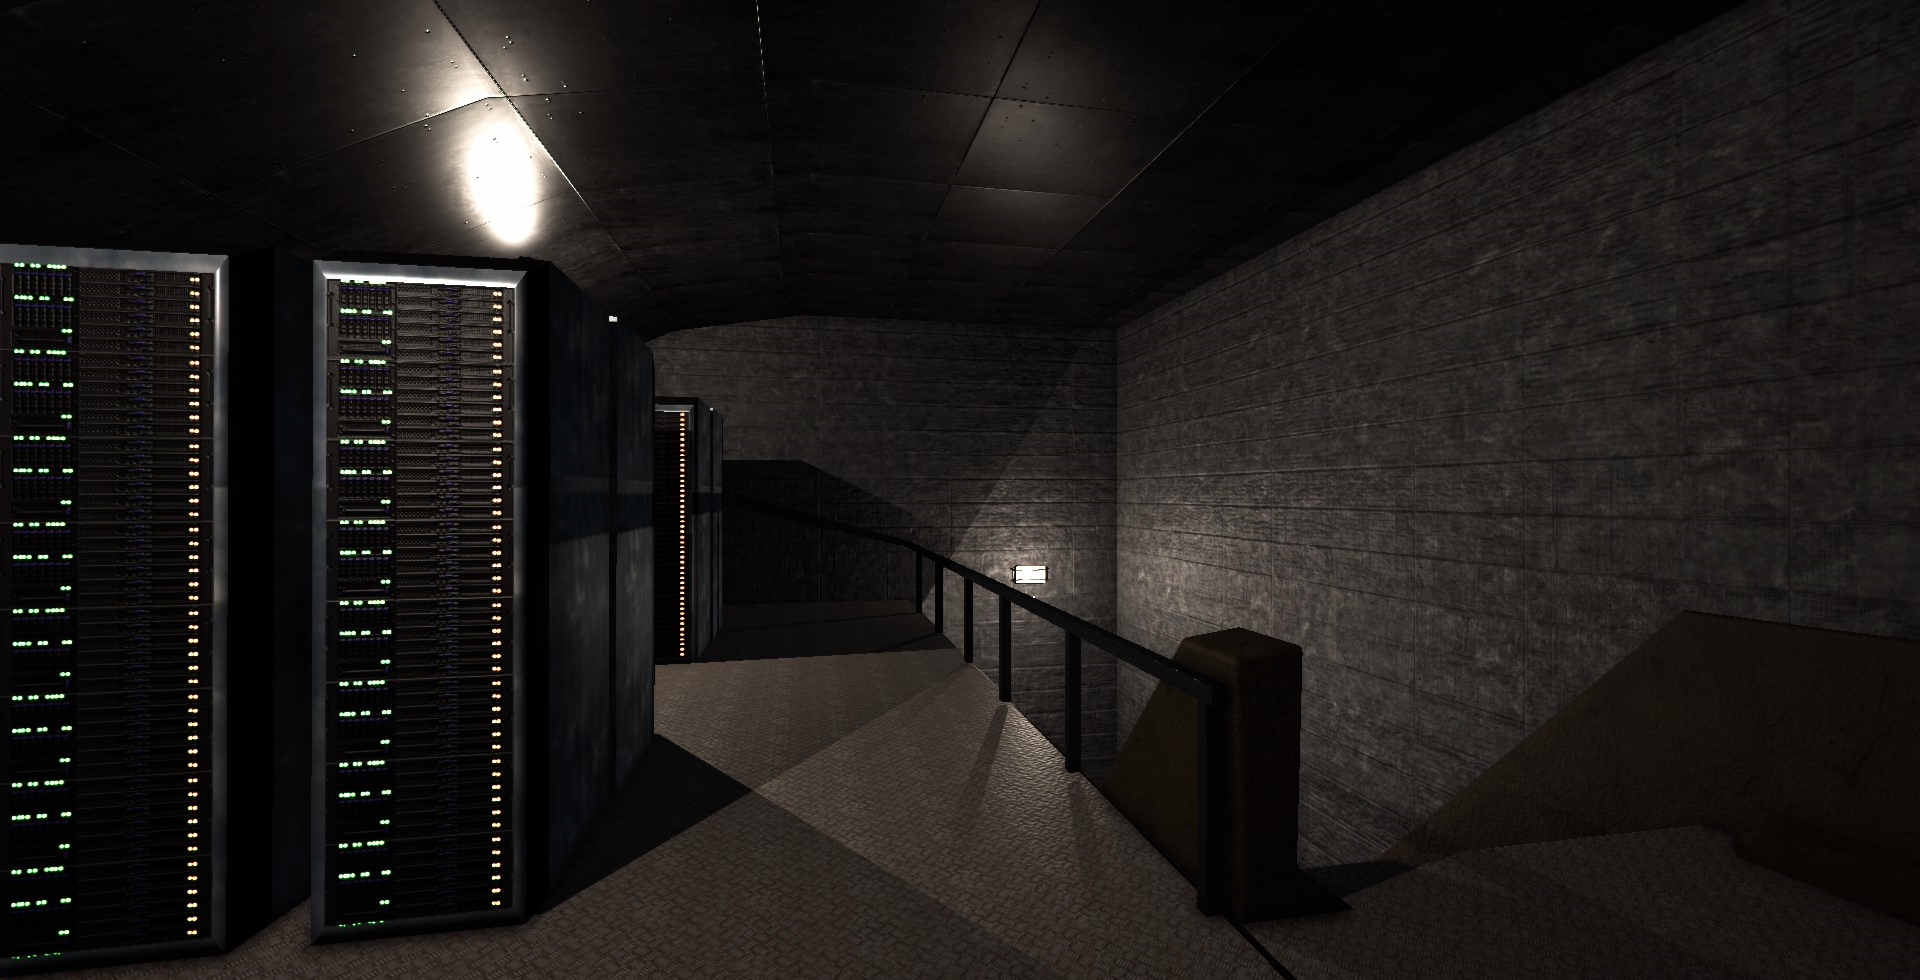 Scp sl server. SCP: Secret Laboratory серверы. Серверная комната SCP Containment Breach. SCP коридор комплекса.